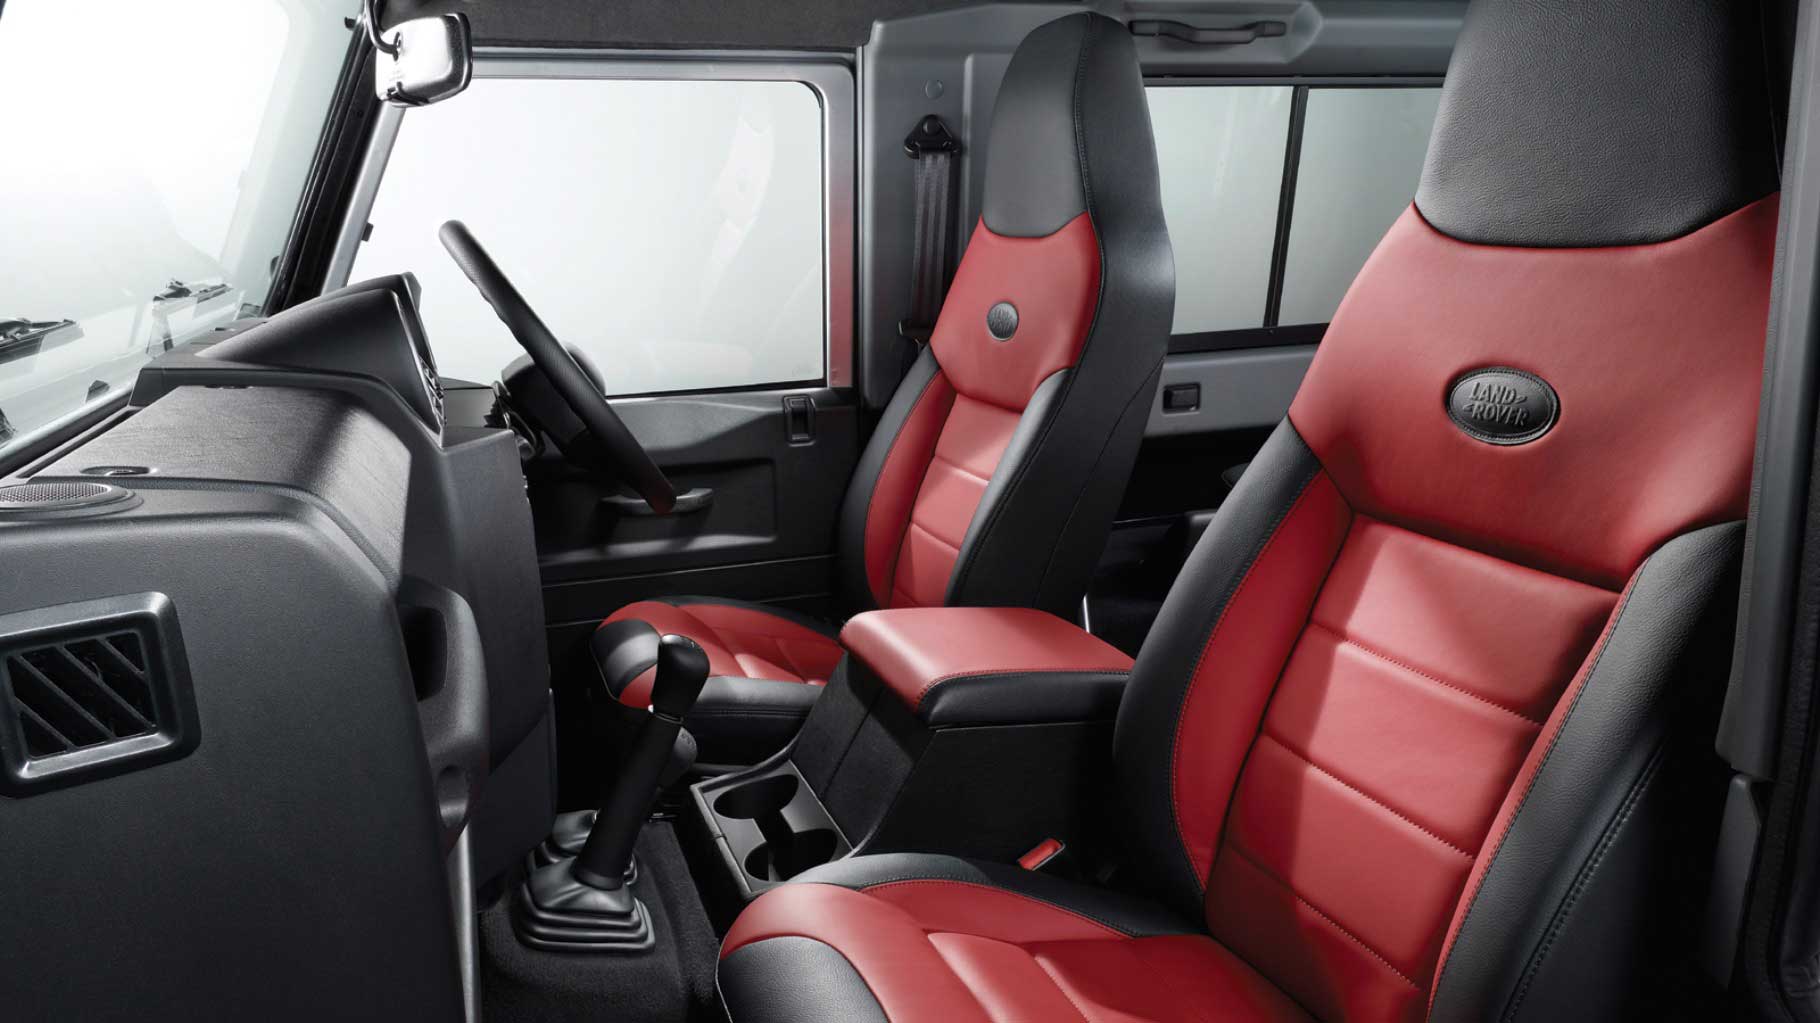 Land Rover Defender 110 interior seat view